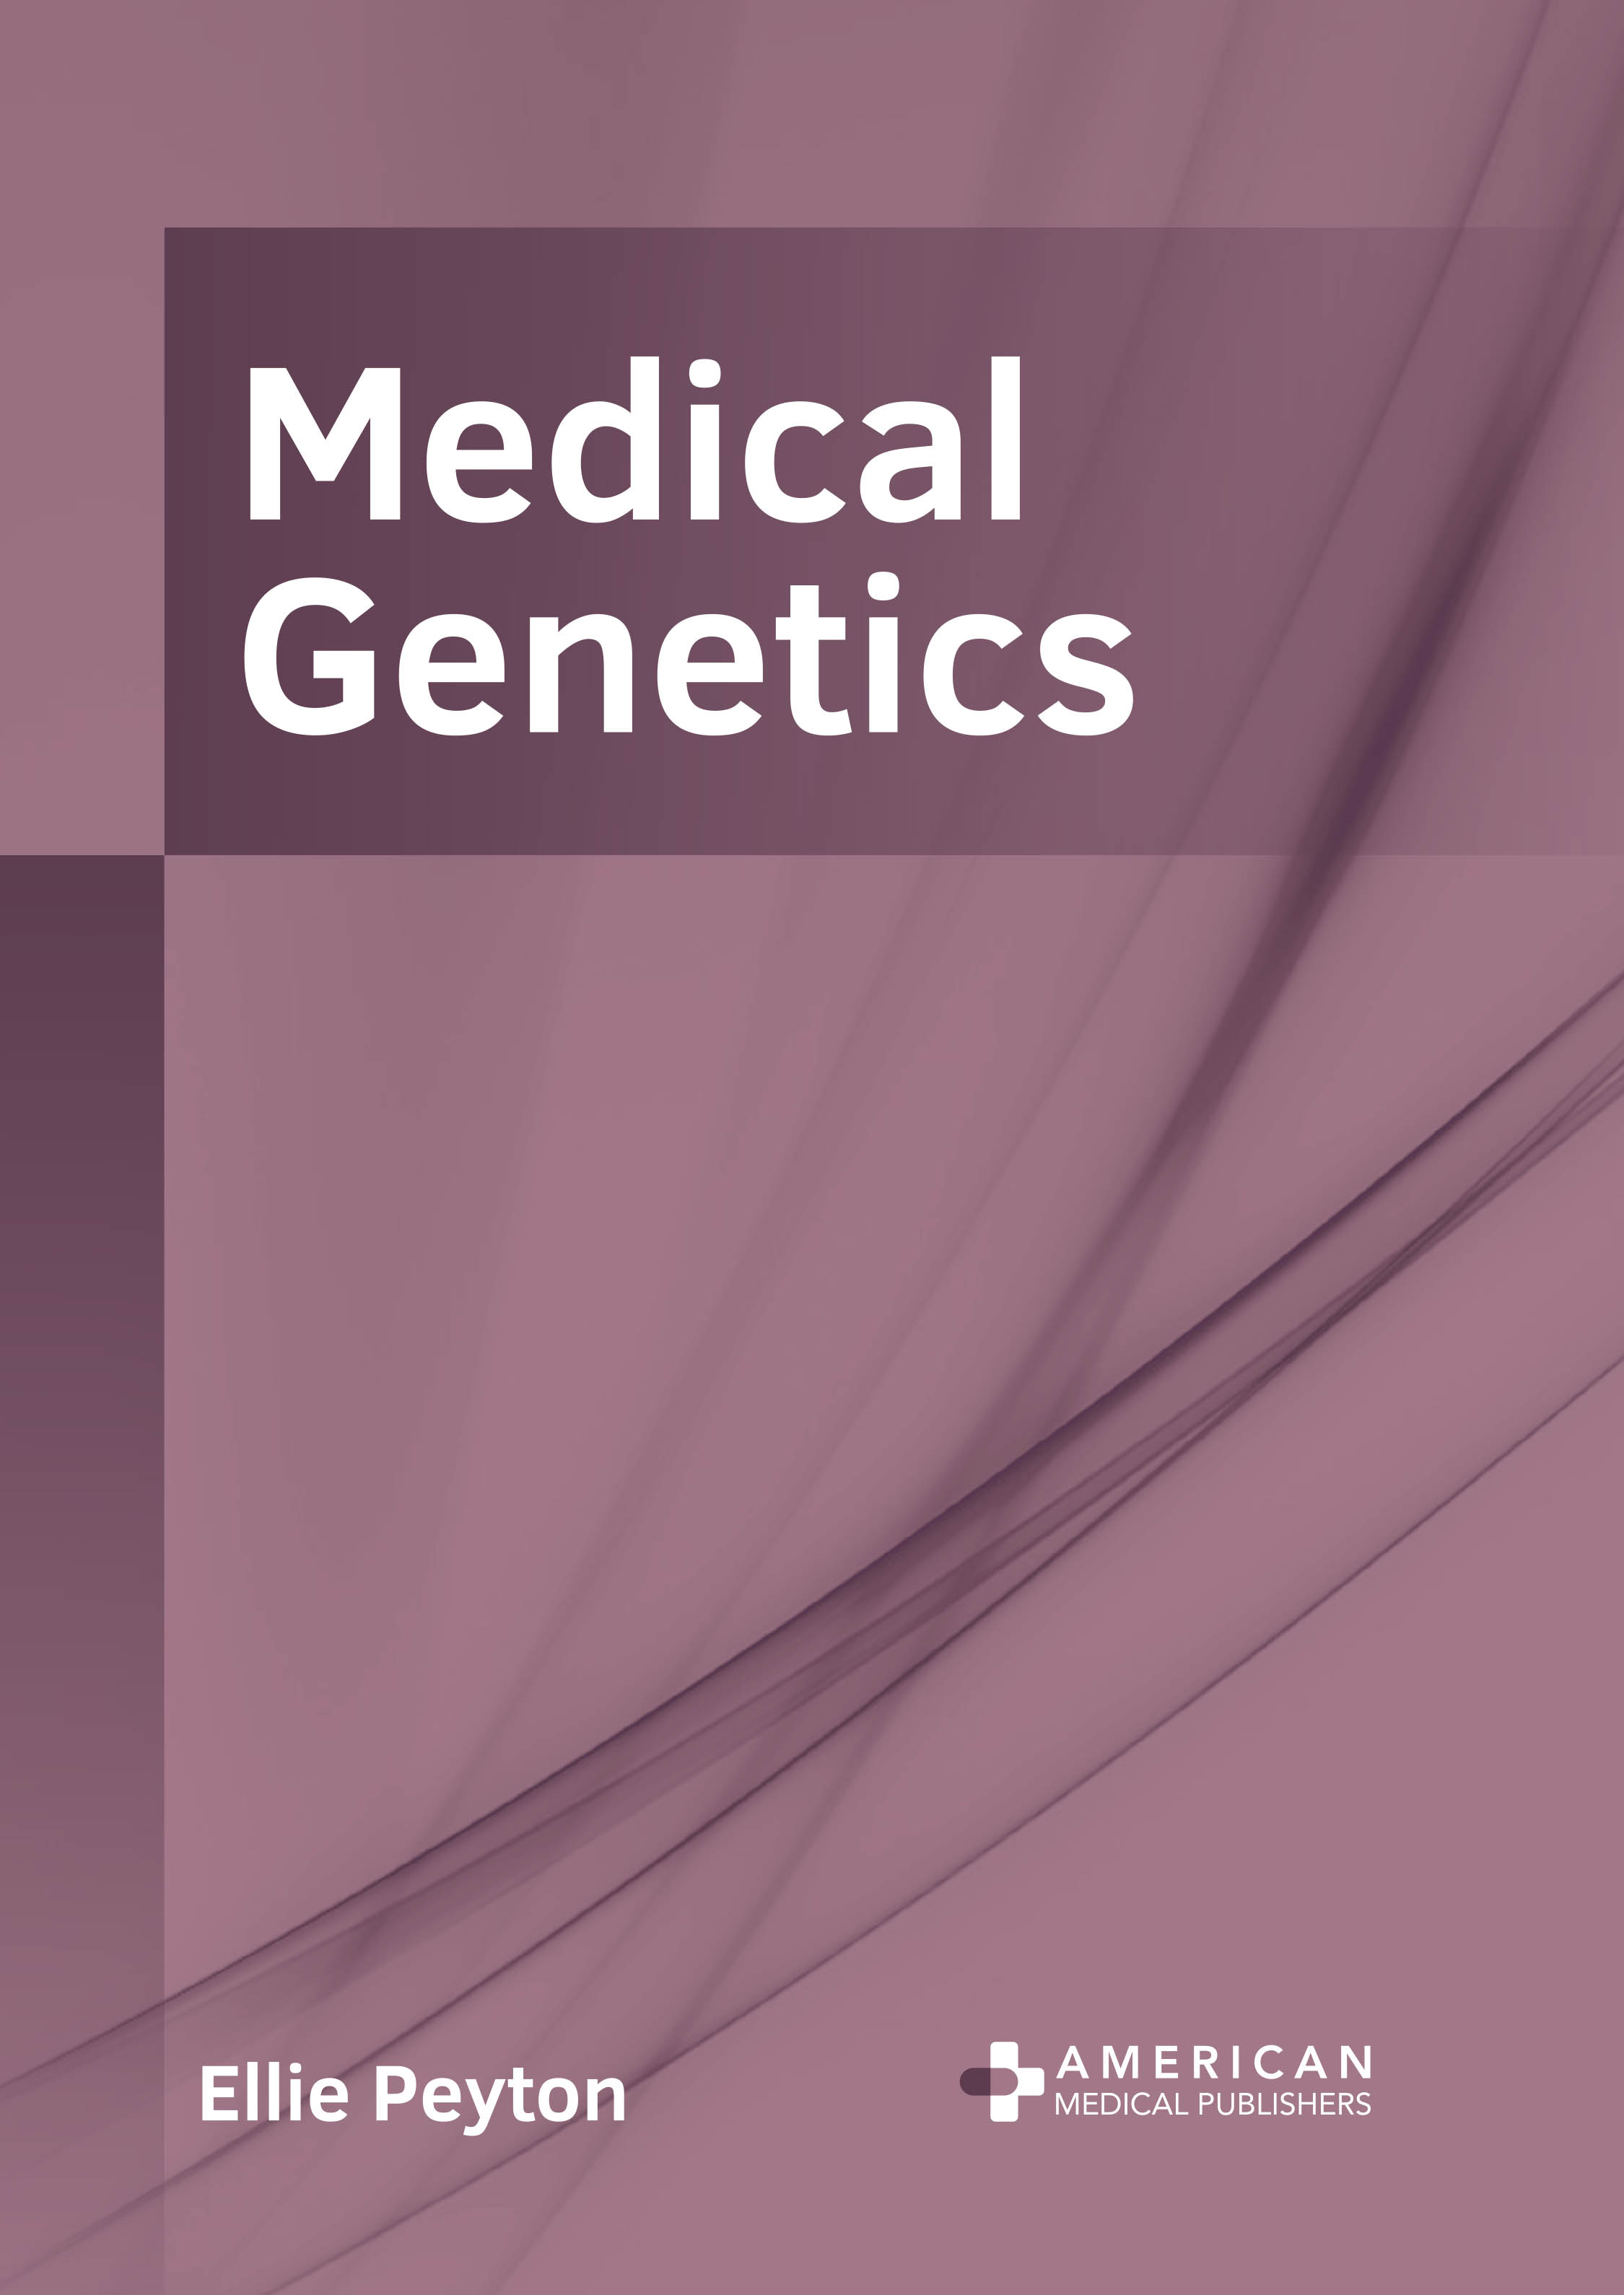 

medical-reference-books/microbiology/medical-genetics-9781639272563